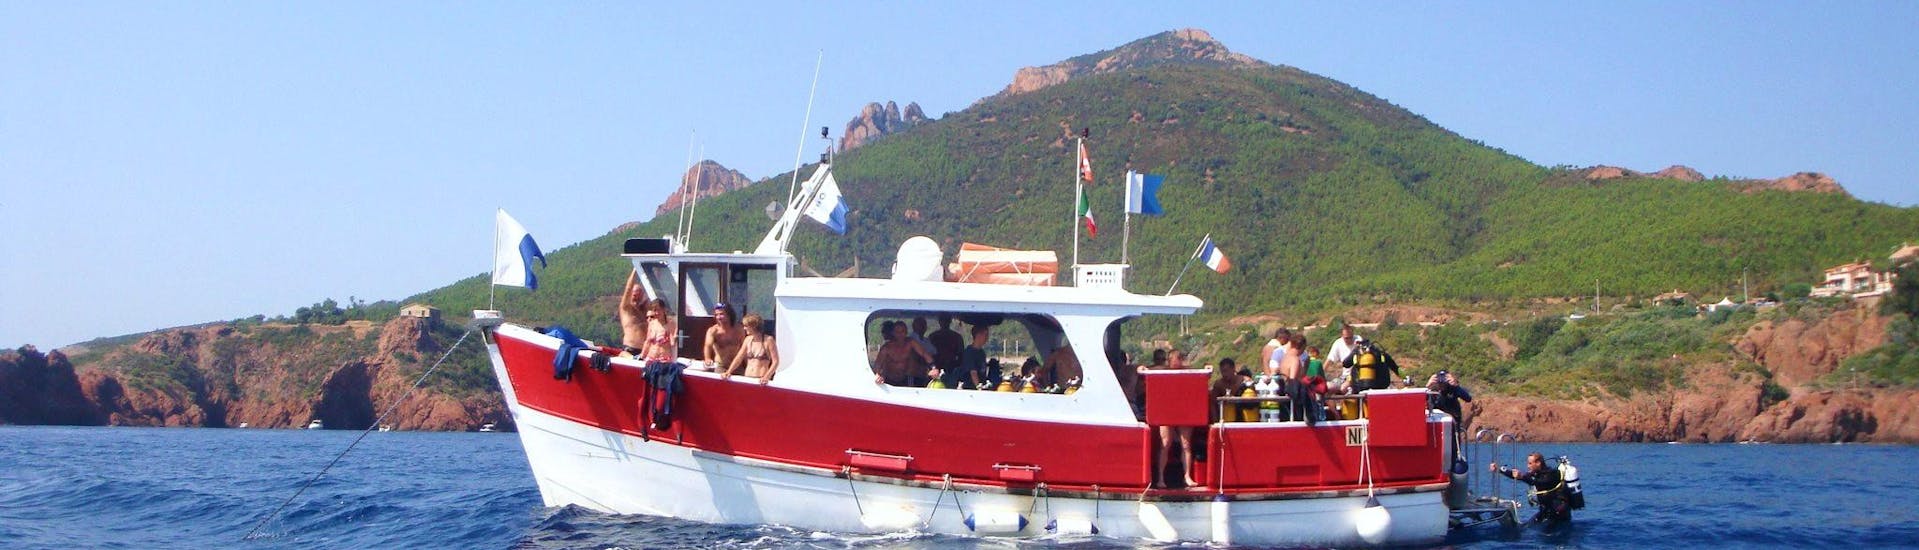 Vista del barco del Dive Center La Rague frente al macizo del Estérel utilizado para la Tarde de Esnórquel cerca de Cannes.